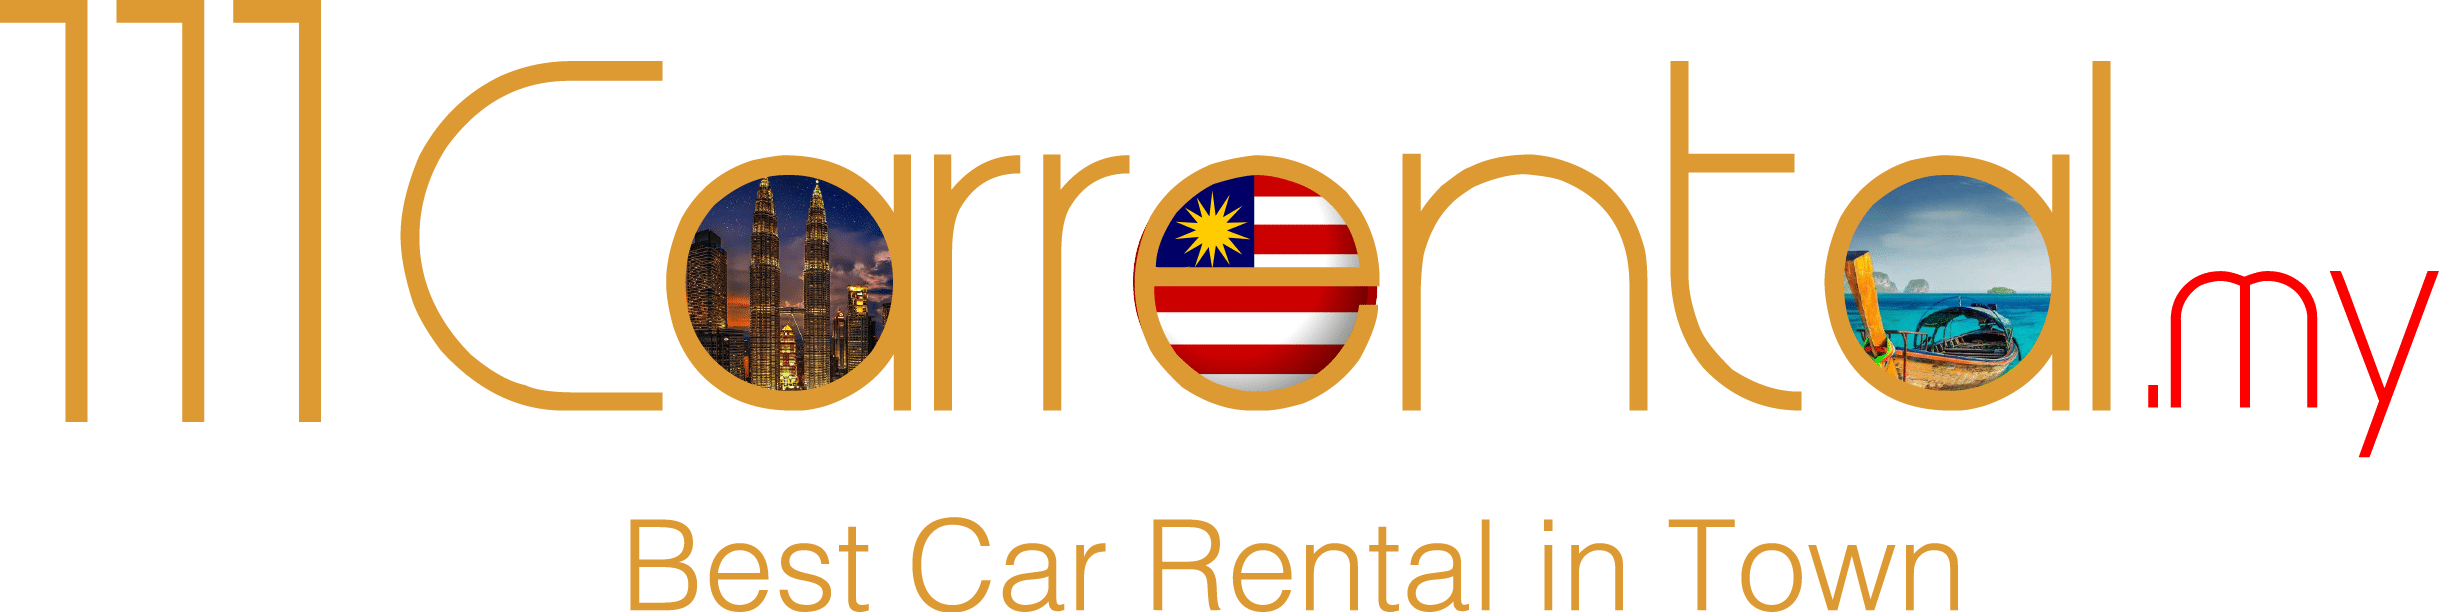 111 Car Rental | Honda City 1.5 AT - 111 Car Rental